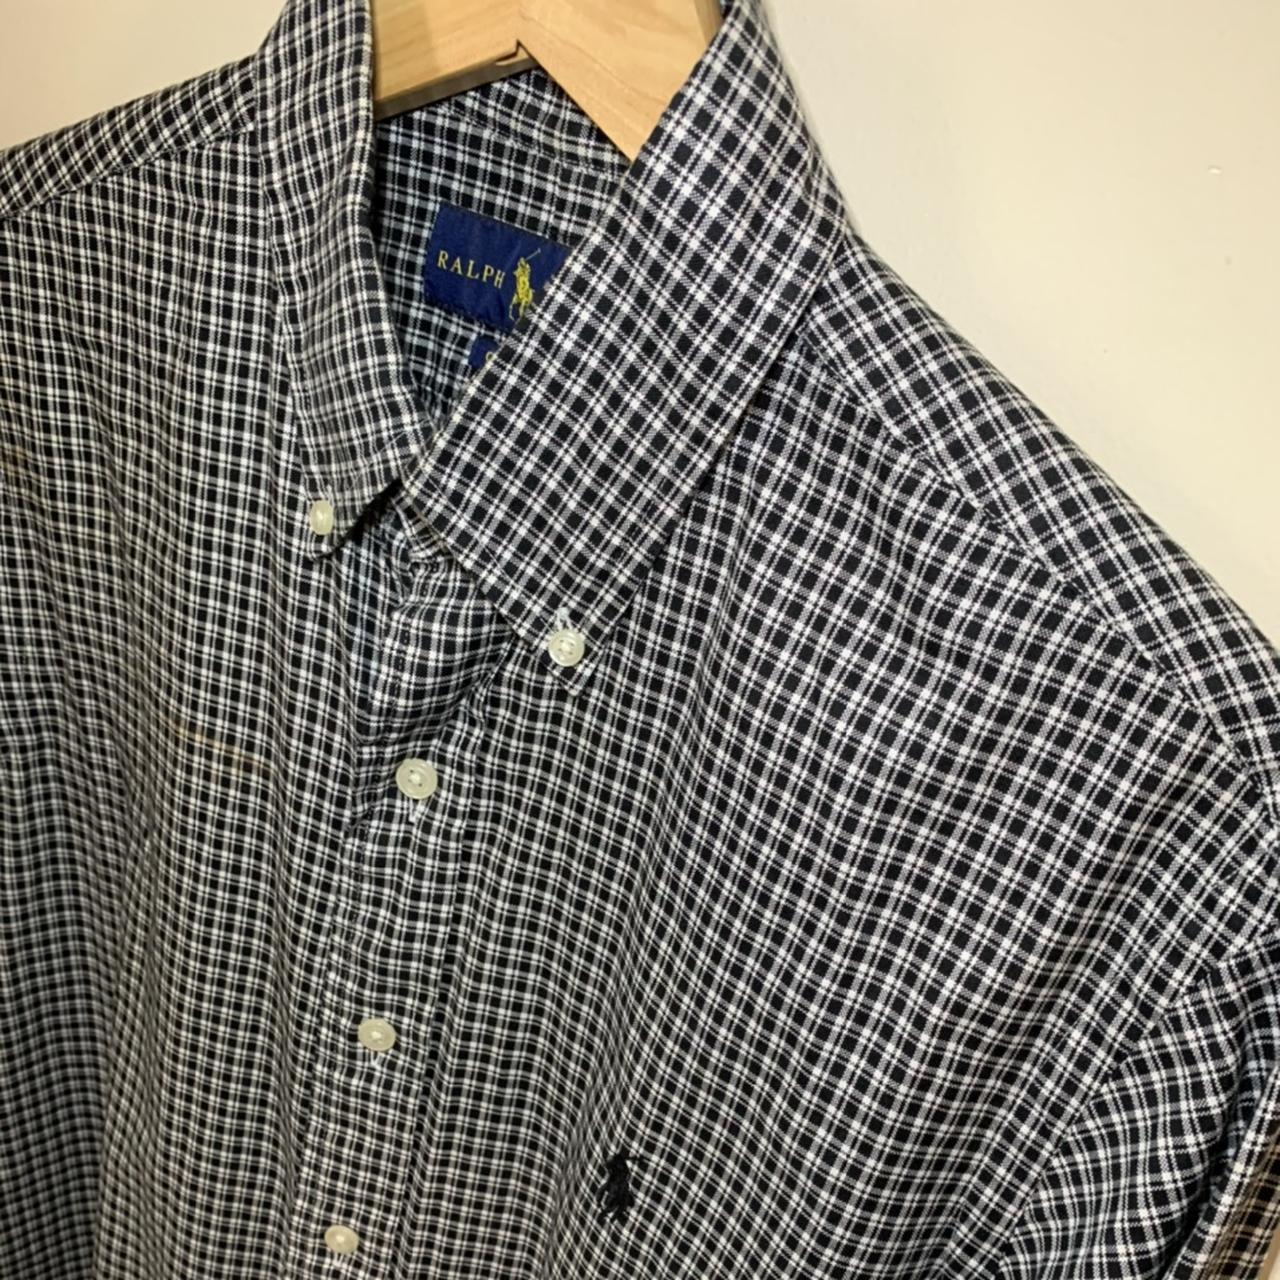 Ralph Lauren shirt Used 10/10 condition Classic fit - Depop